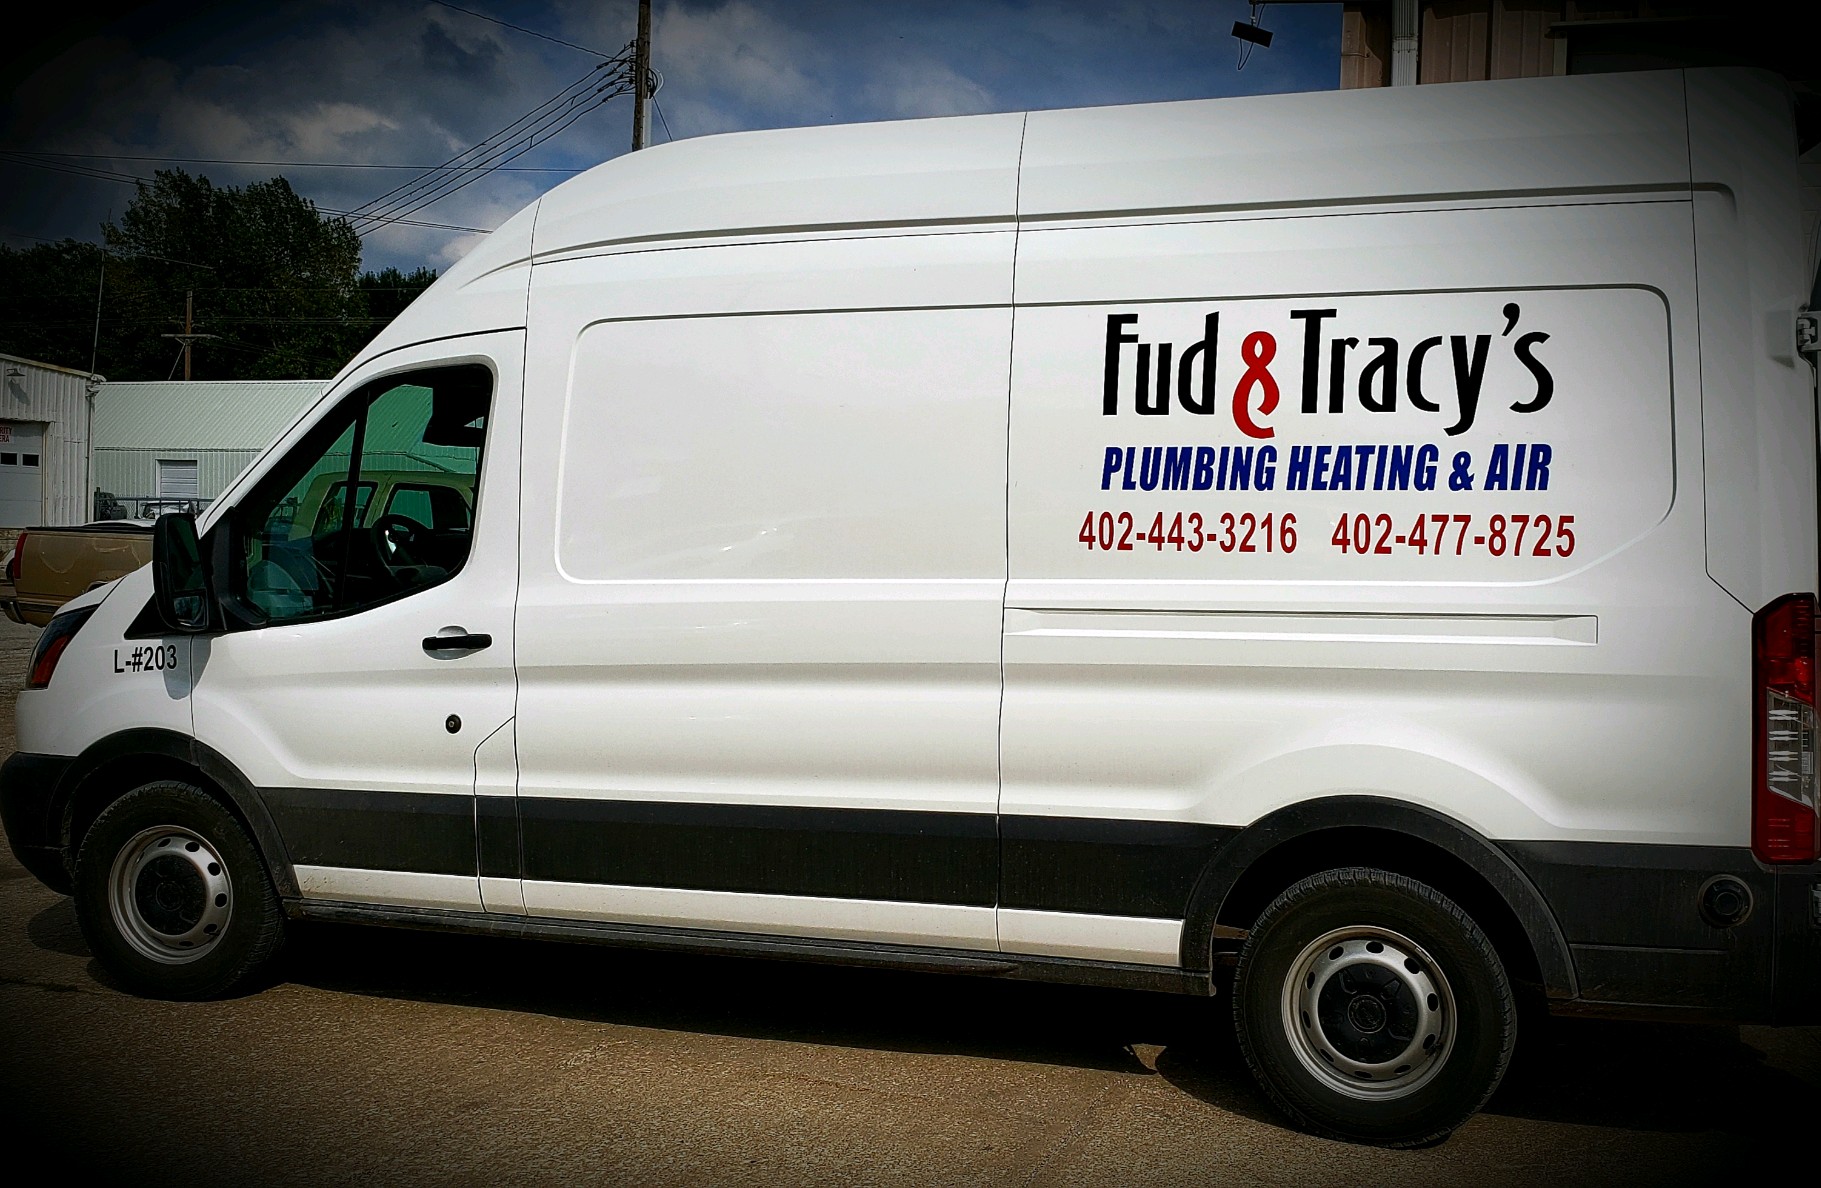 Fud & Tracys Plumbing & Heating Inc